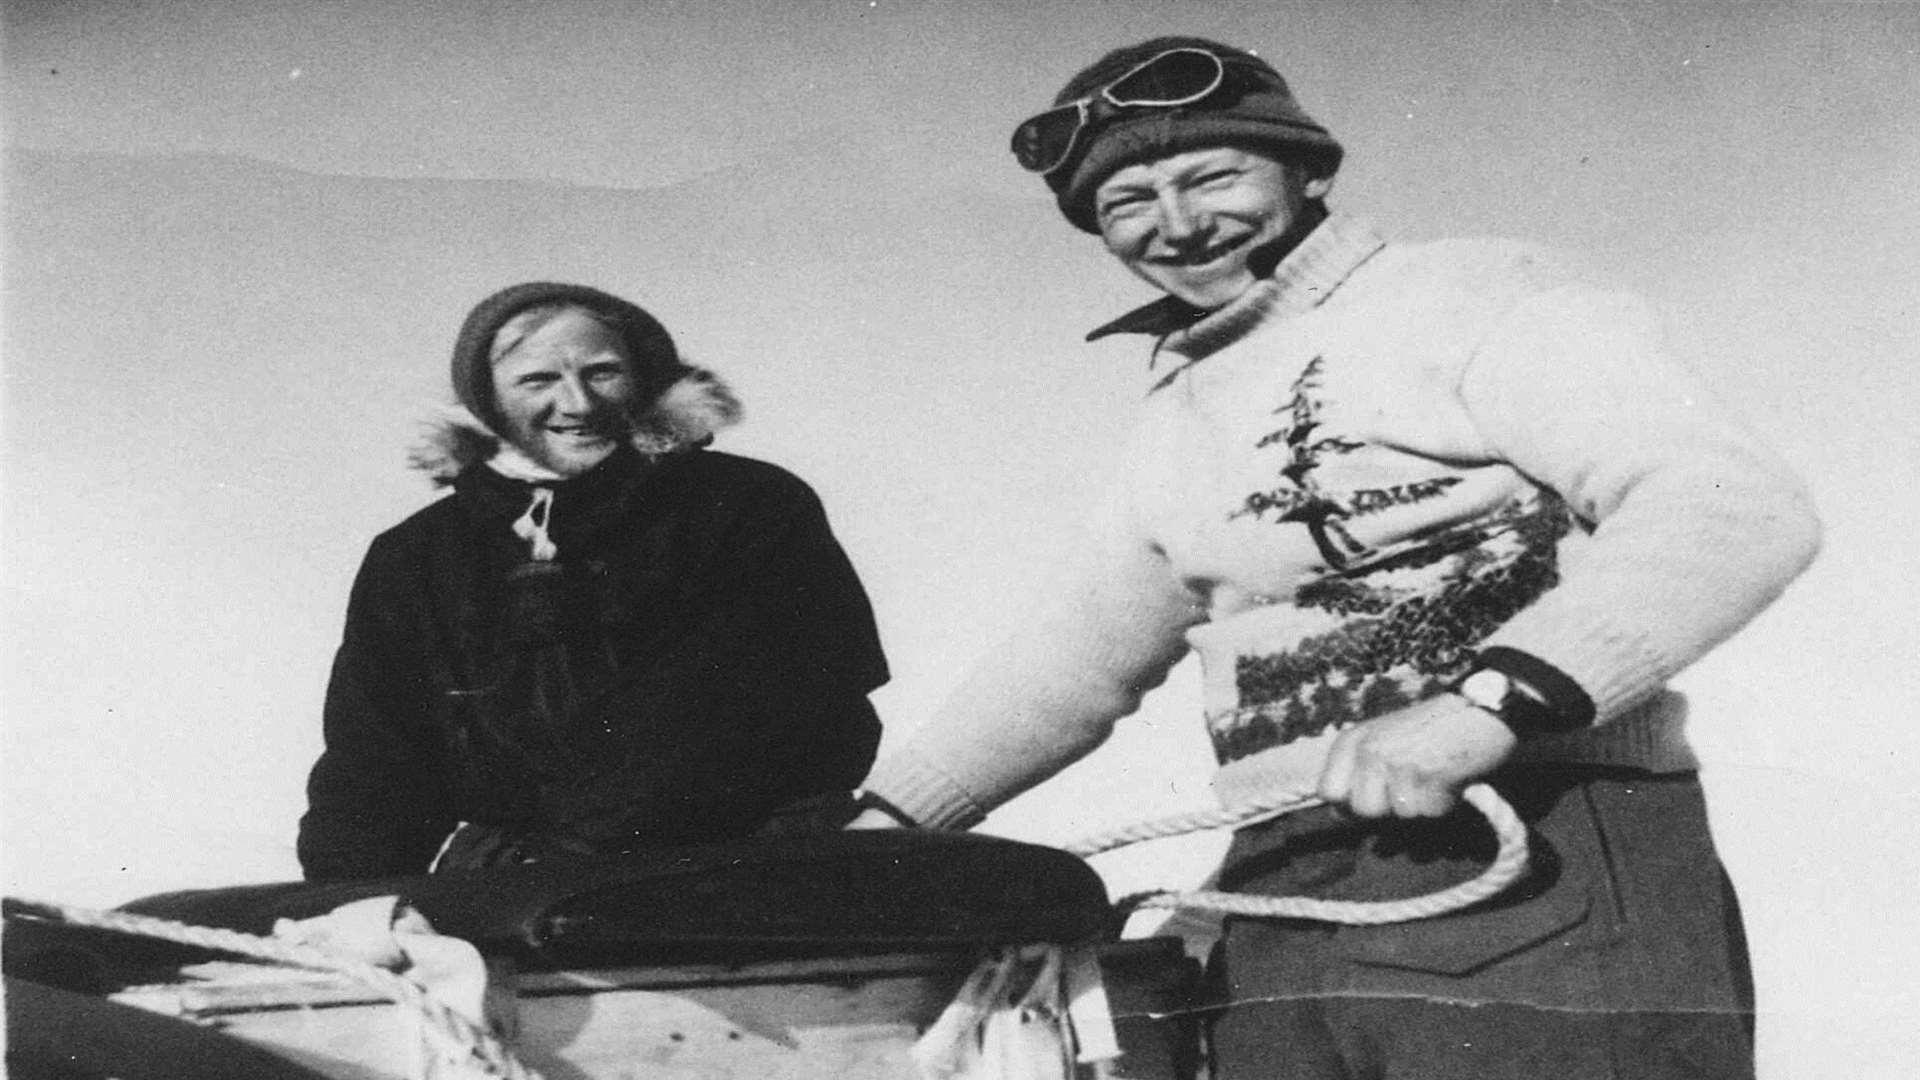 Intrepid adventurer Roy Homard on his second expedition across Antarctica